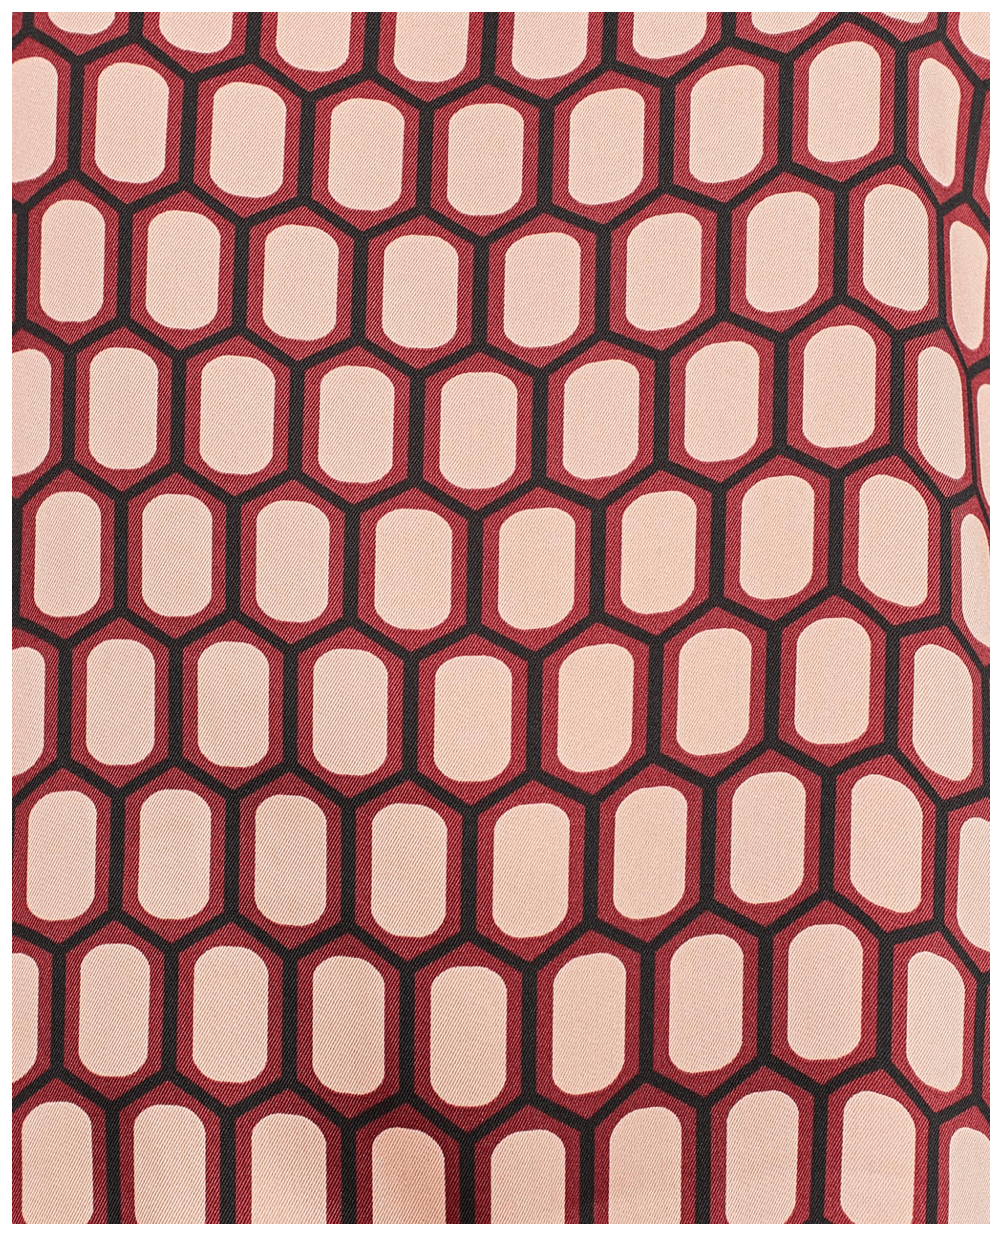 Clothing textile design  surface design Surface Pattern textile print design Fashion  zara geometric pattern fashion design